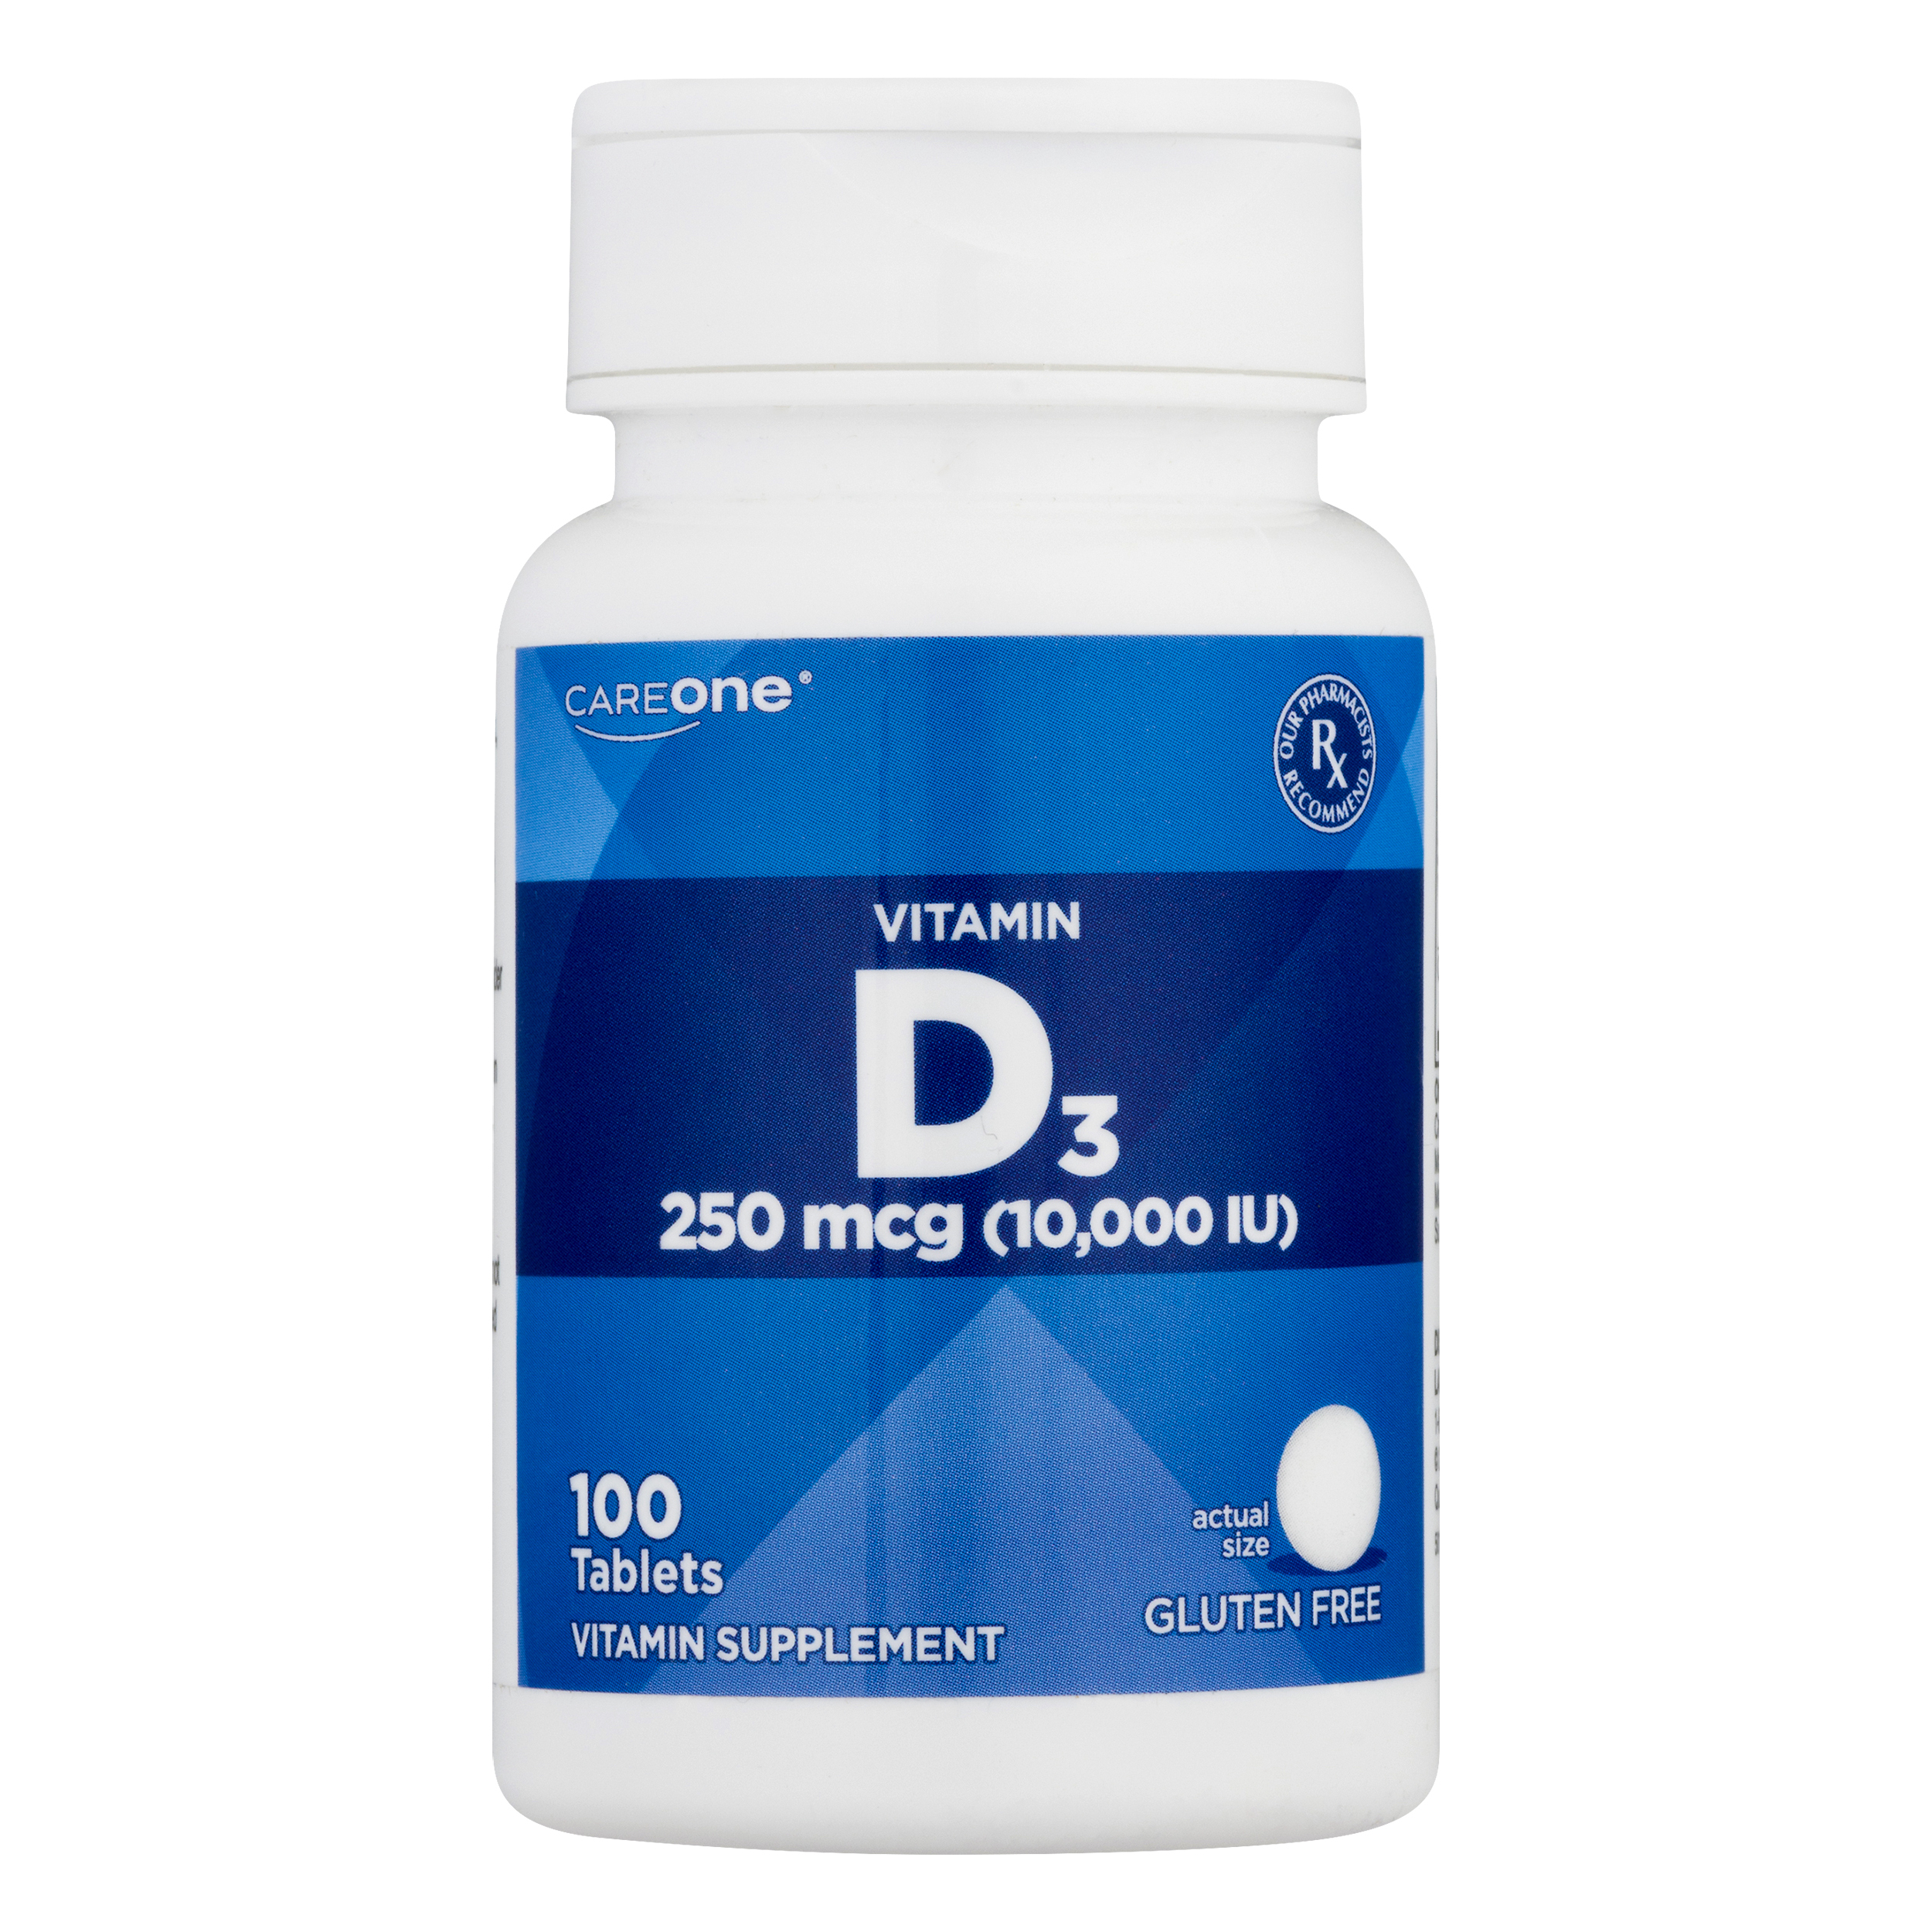 Careone Vitamin D3, 250 mcg, Tablets, Bottle